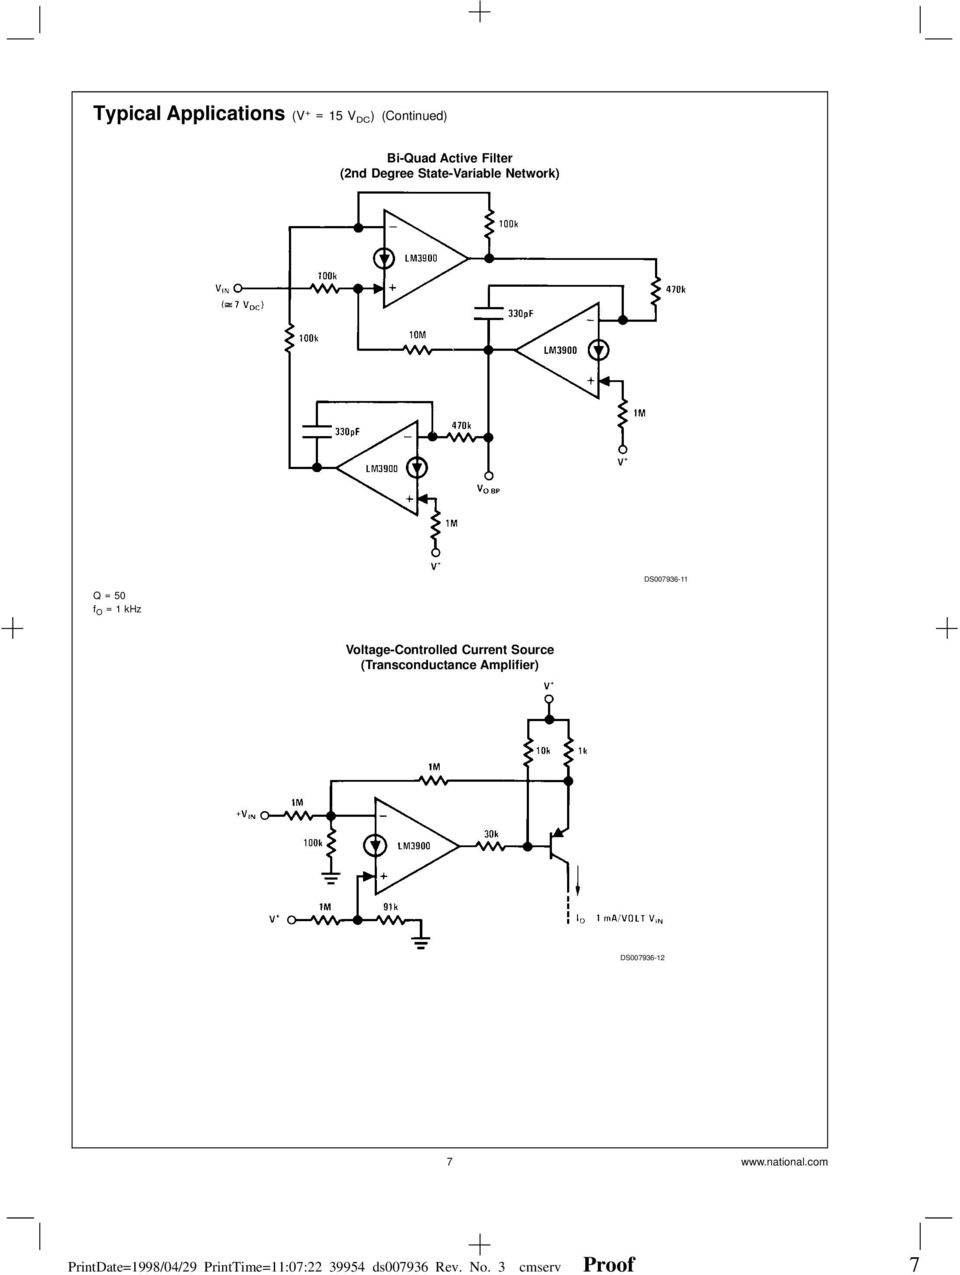 (Transconductance Amplifier) DS007936-12 7 www.national.